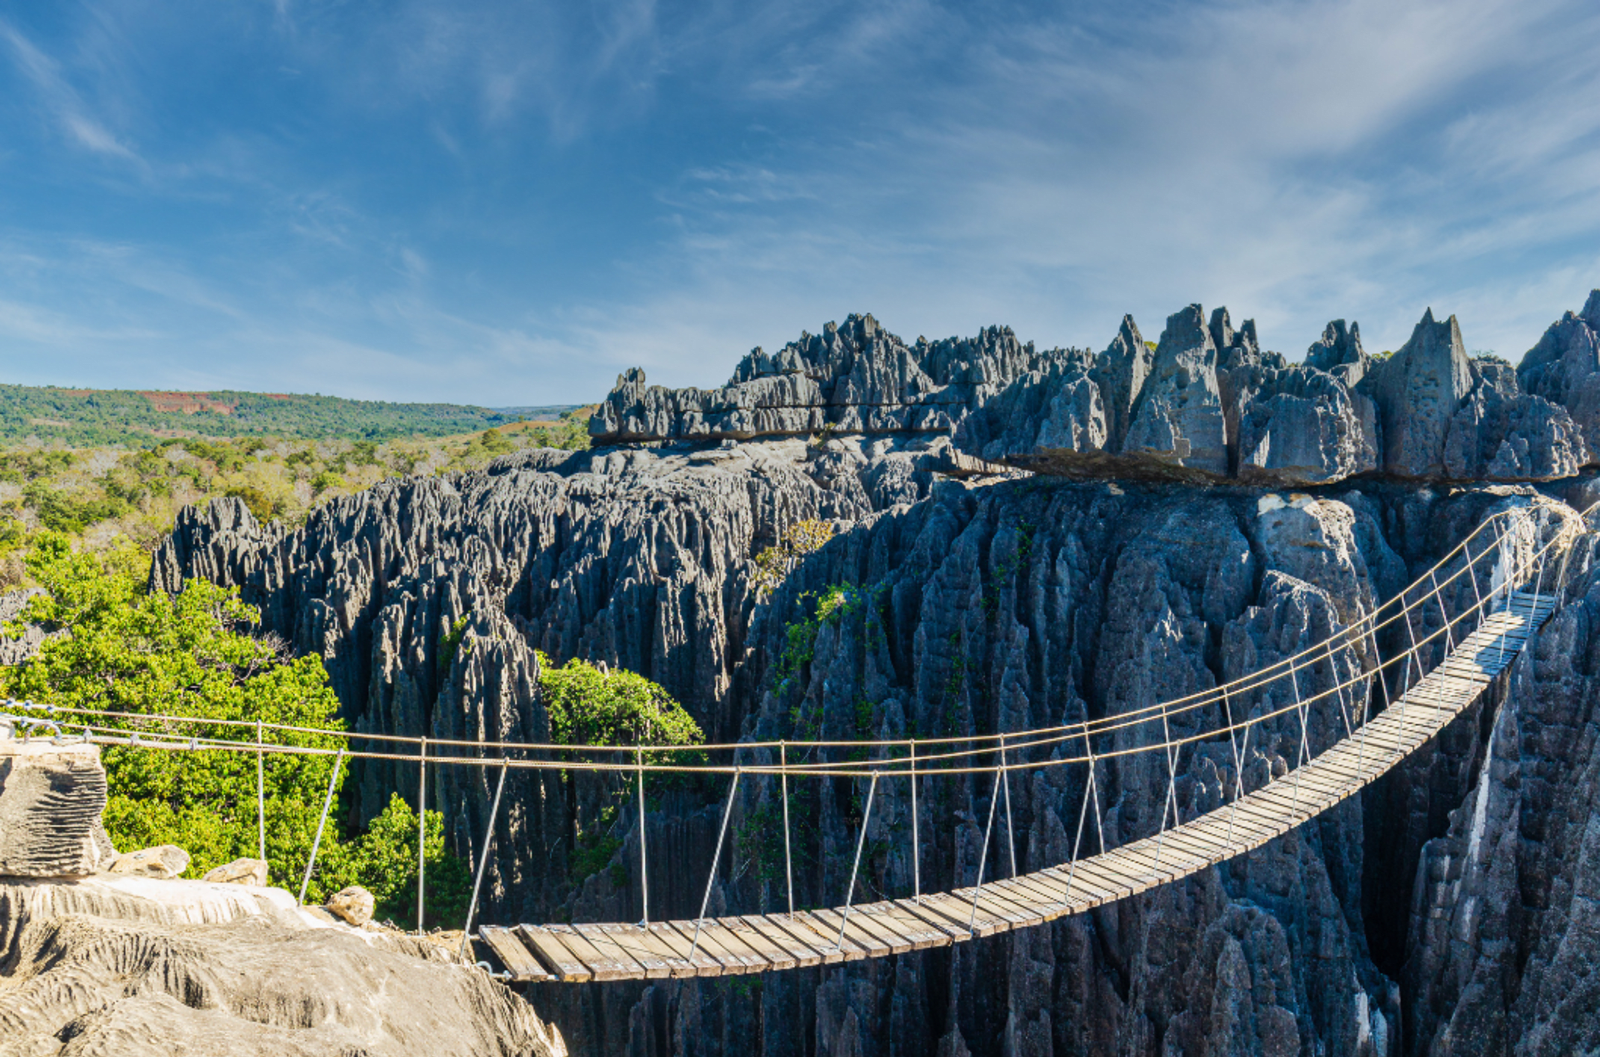 The dramatic monoliths of Tsingy de Bemaraha National Park in Madagascar.